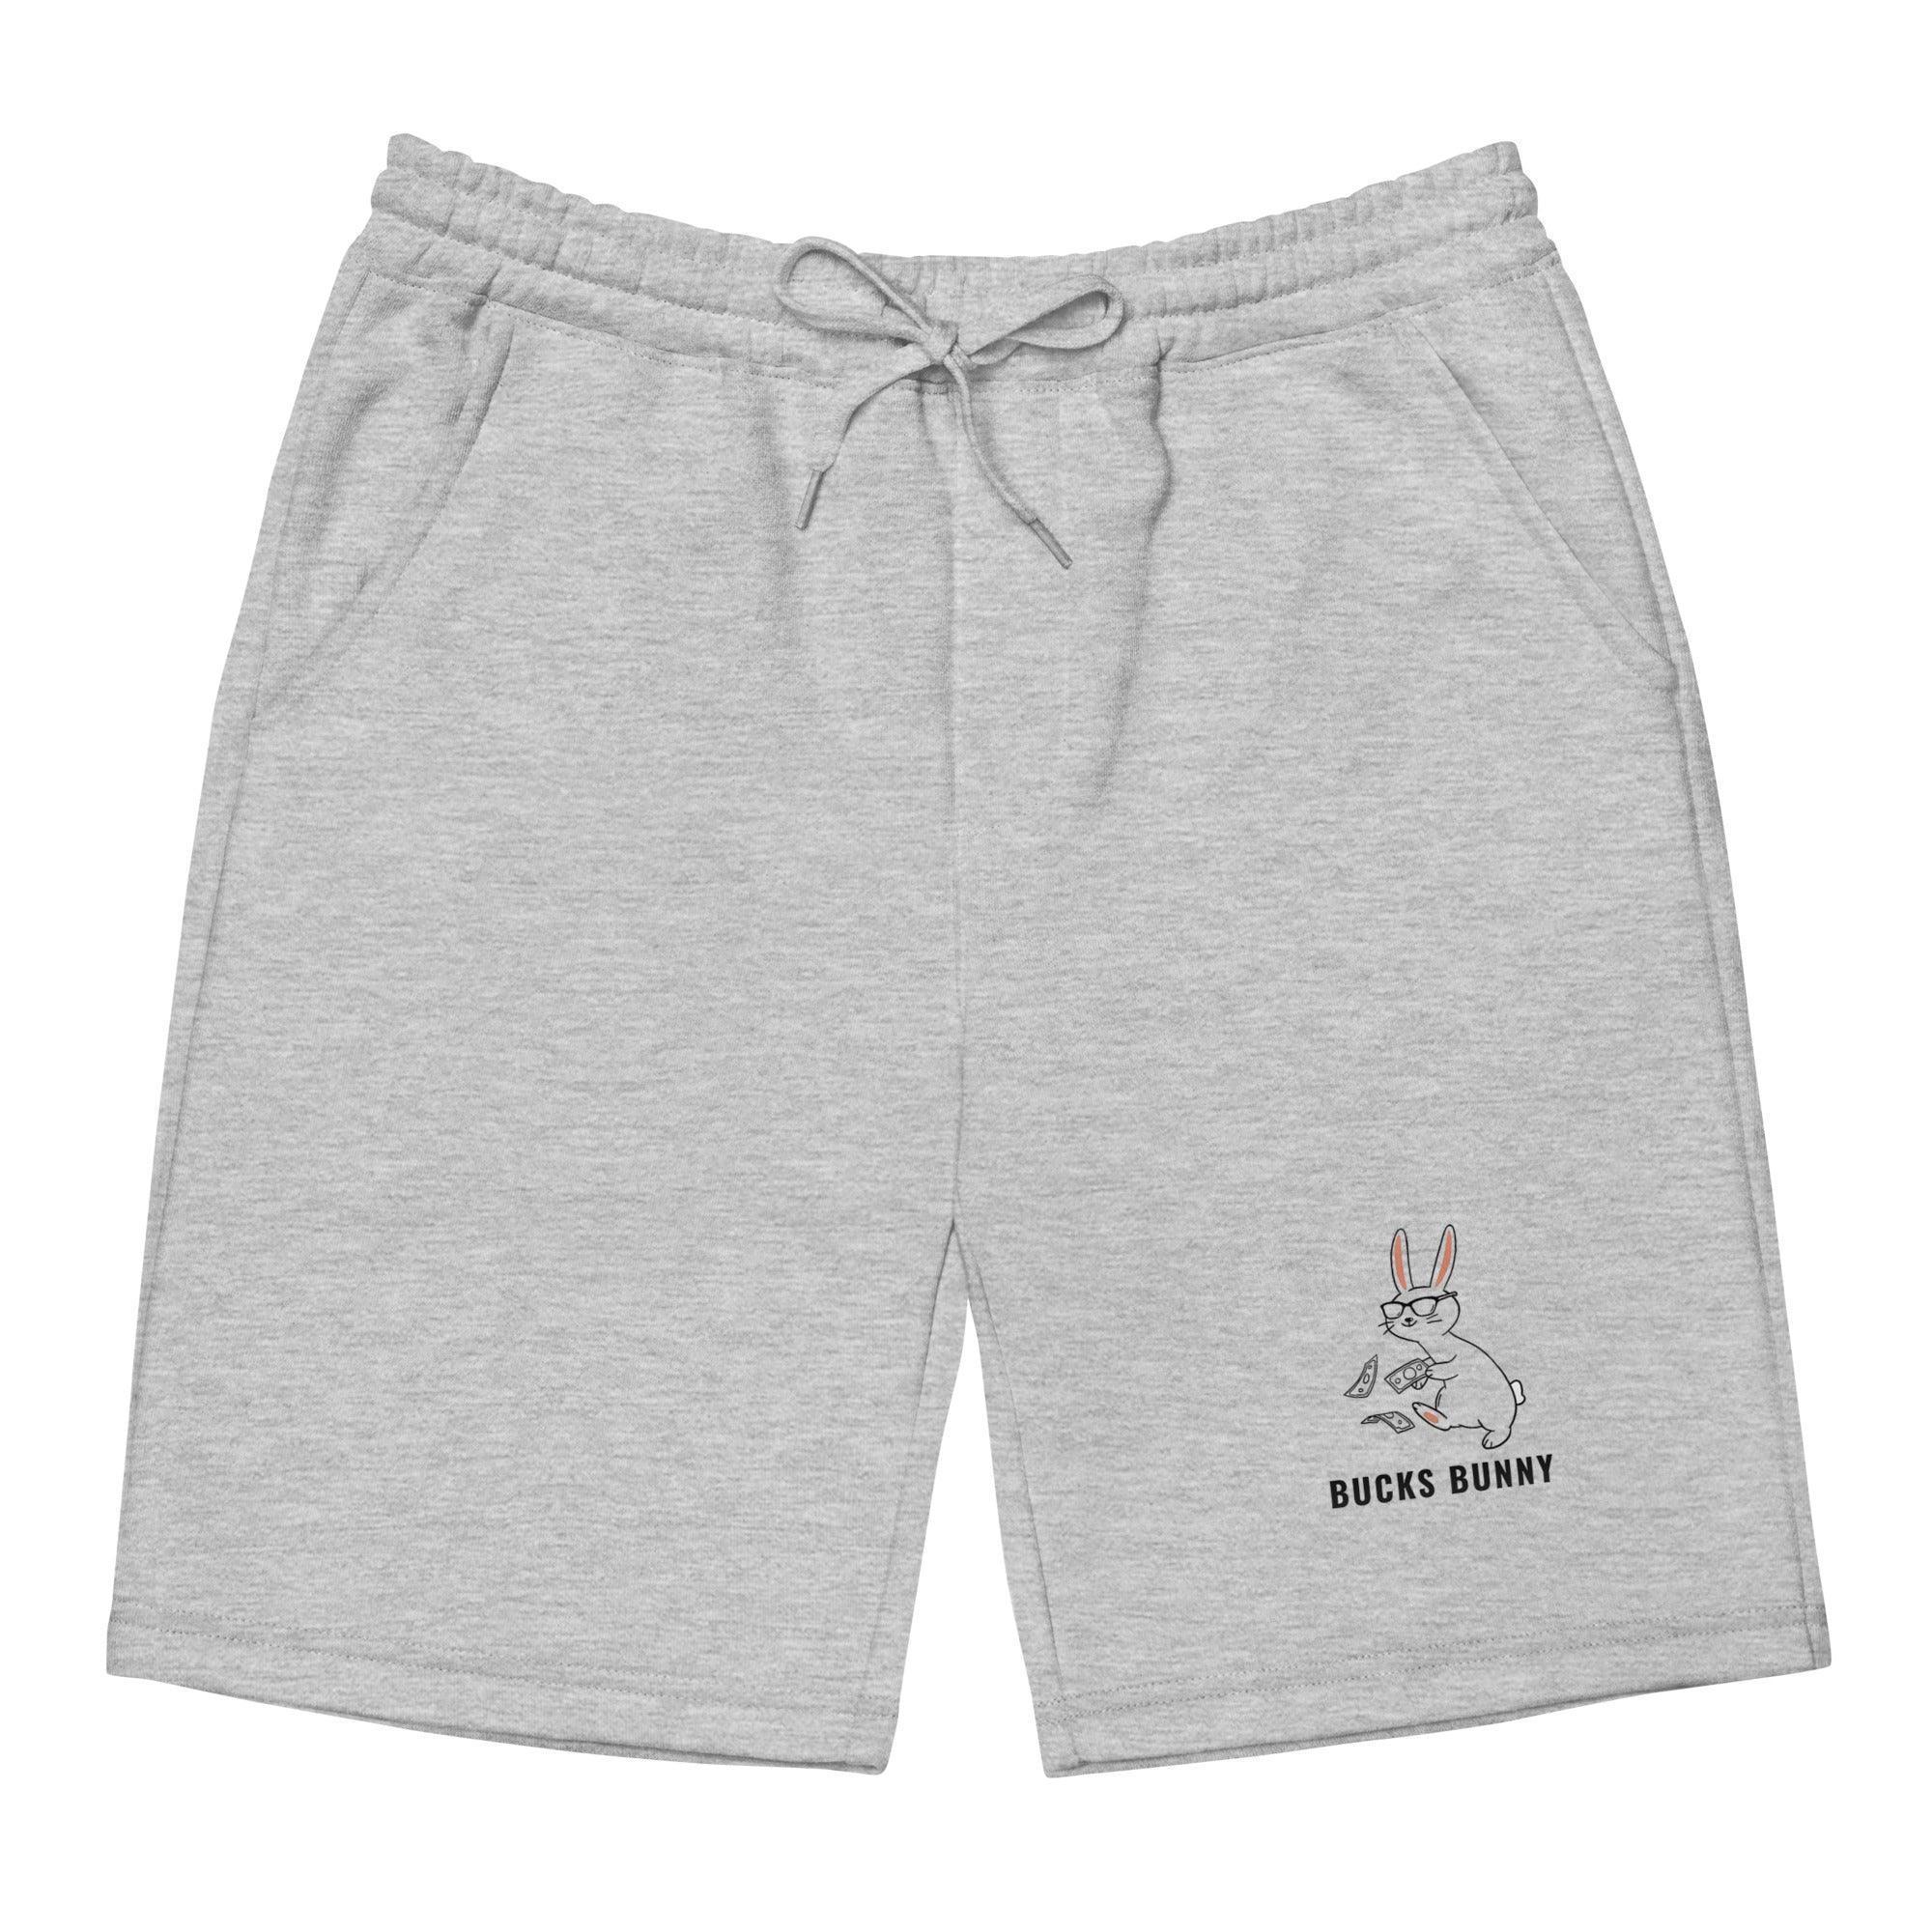 Bucks Bunny Fleece Shorts - InvestmenTees